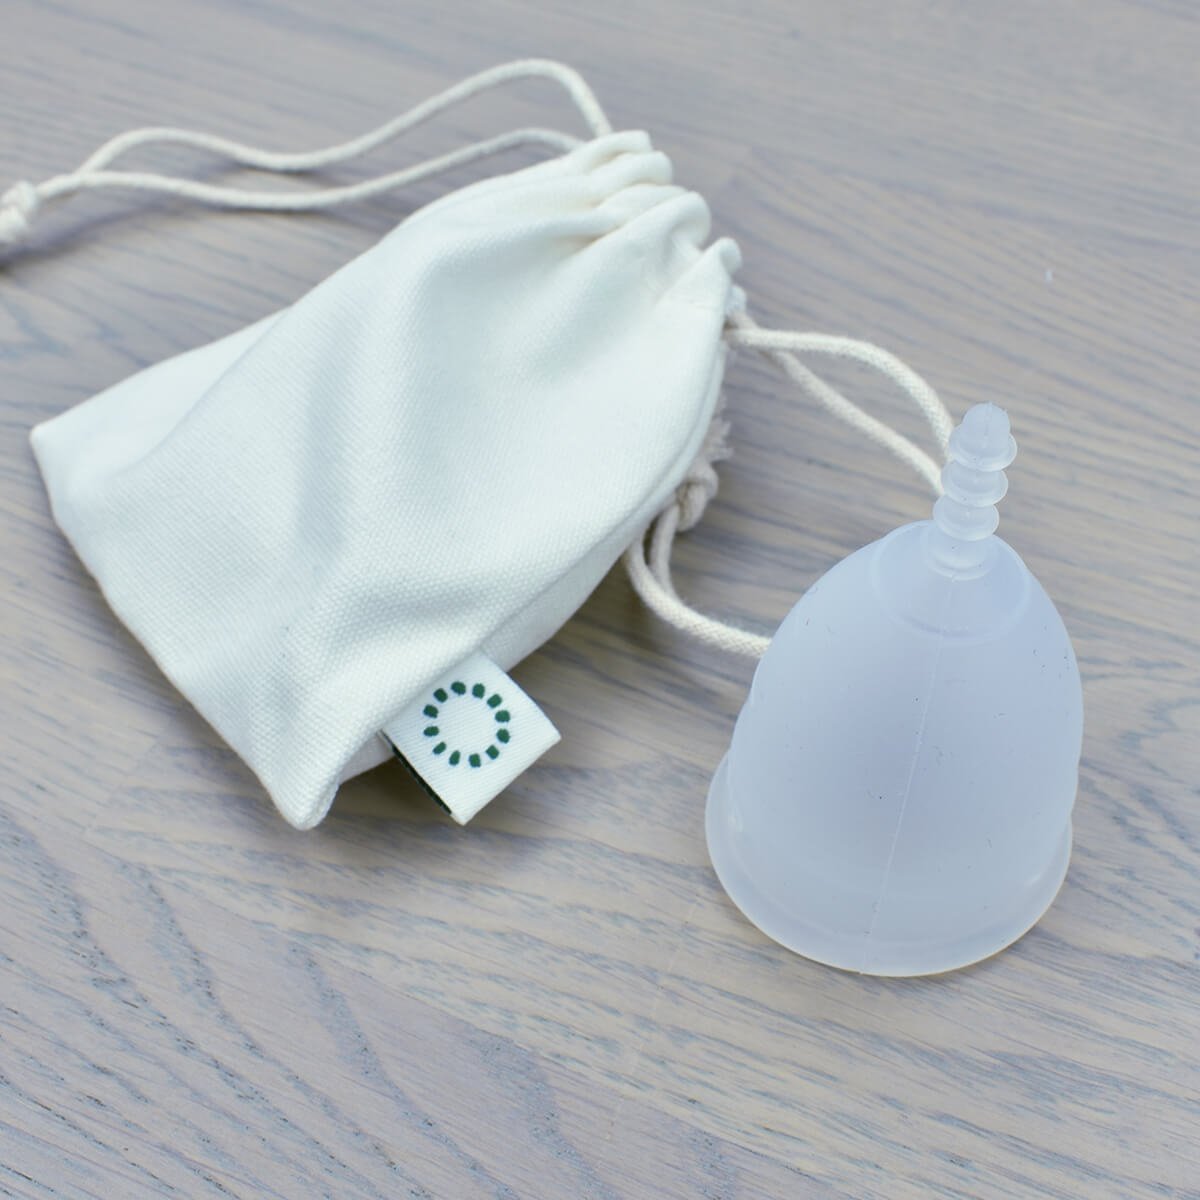 Organi cup menstrual cup and bag